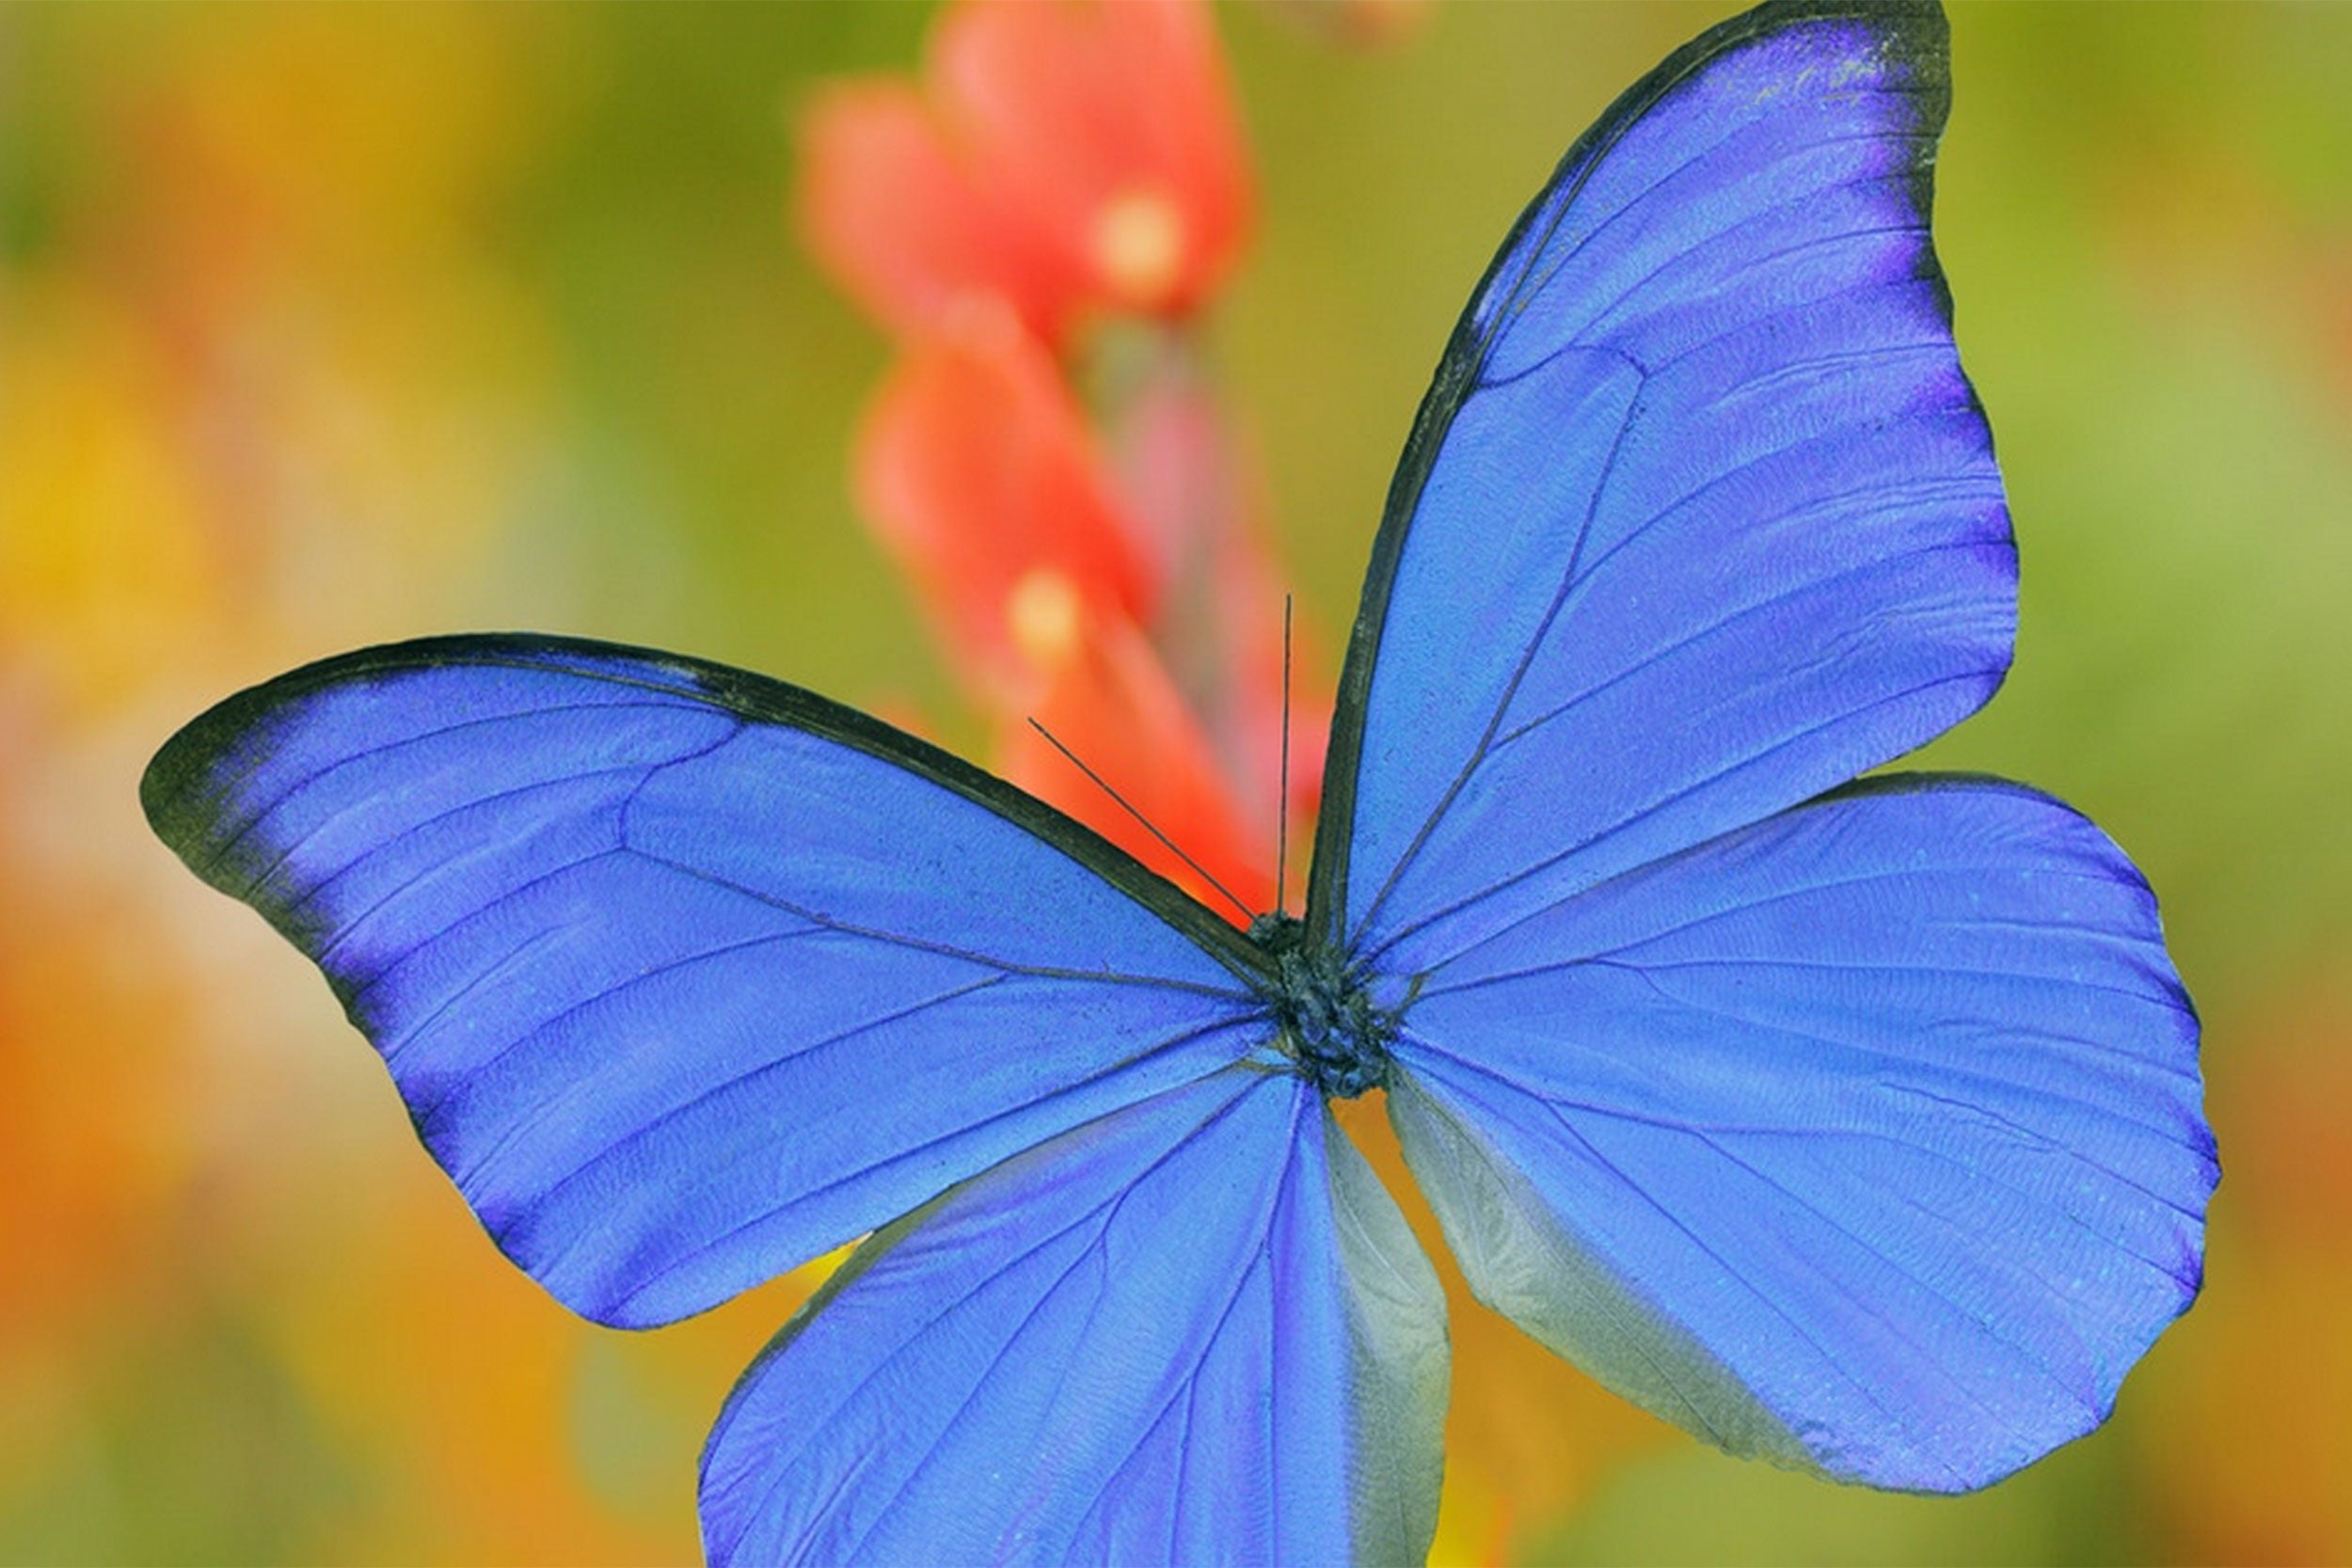 Butterfly wings inspire air-purification improvements — Harvard Gazette